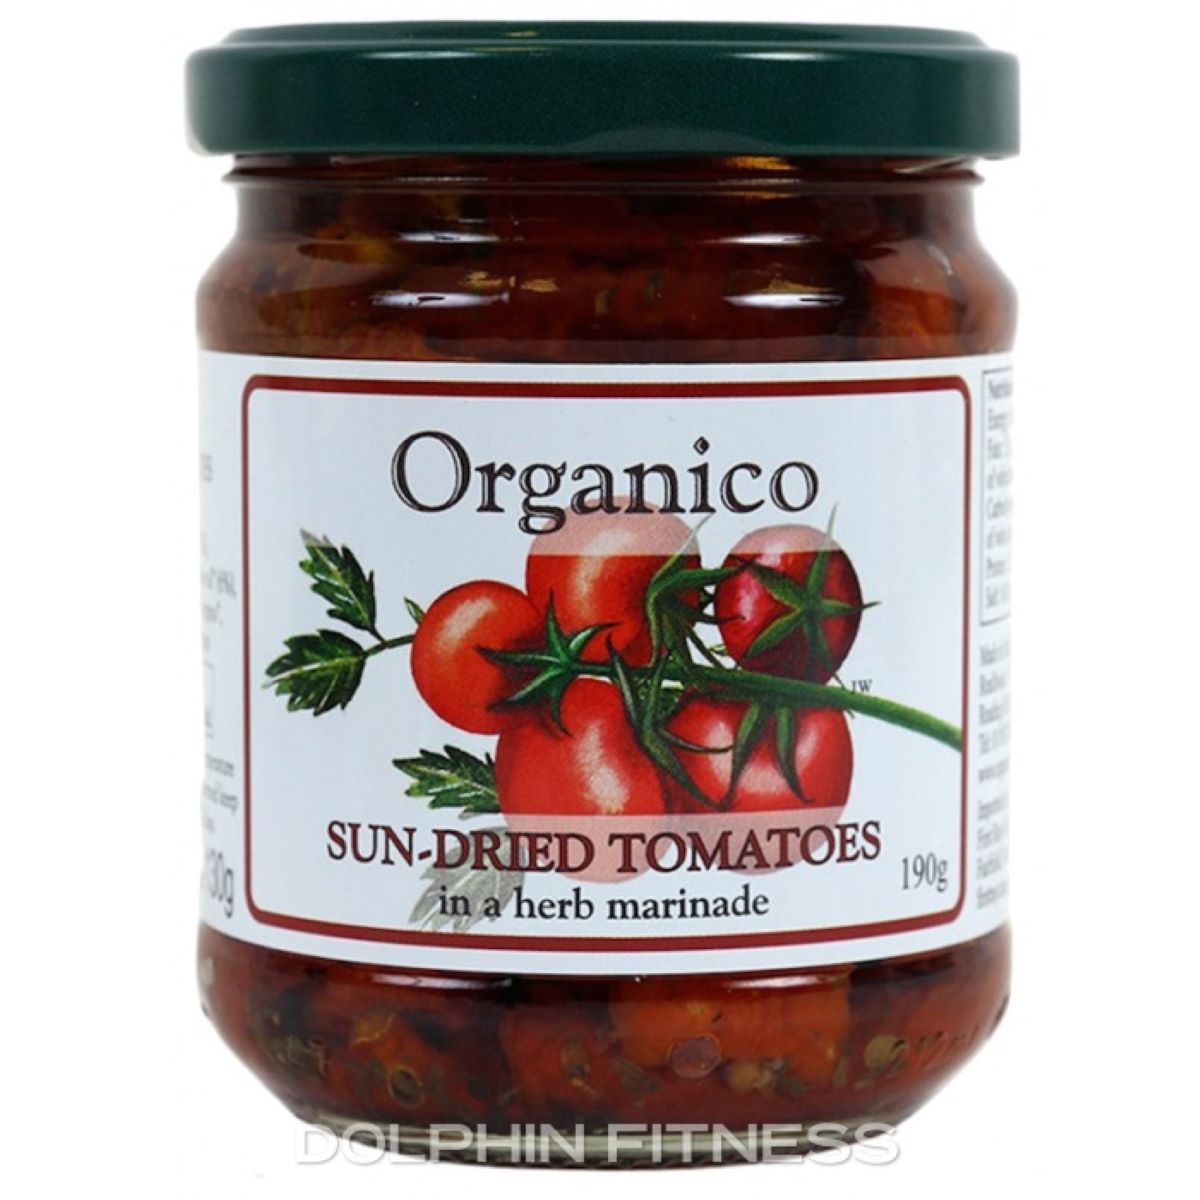 Organico Italian Sun-Dried Tomatoes 190g